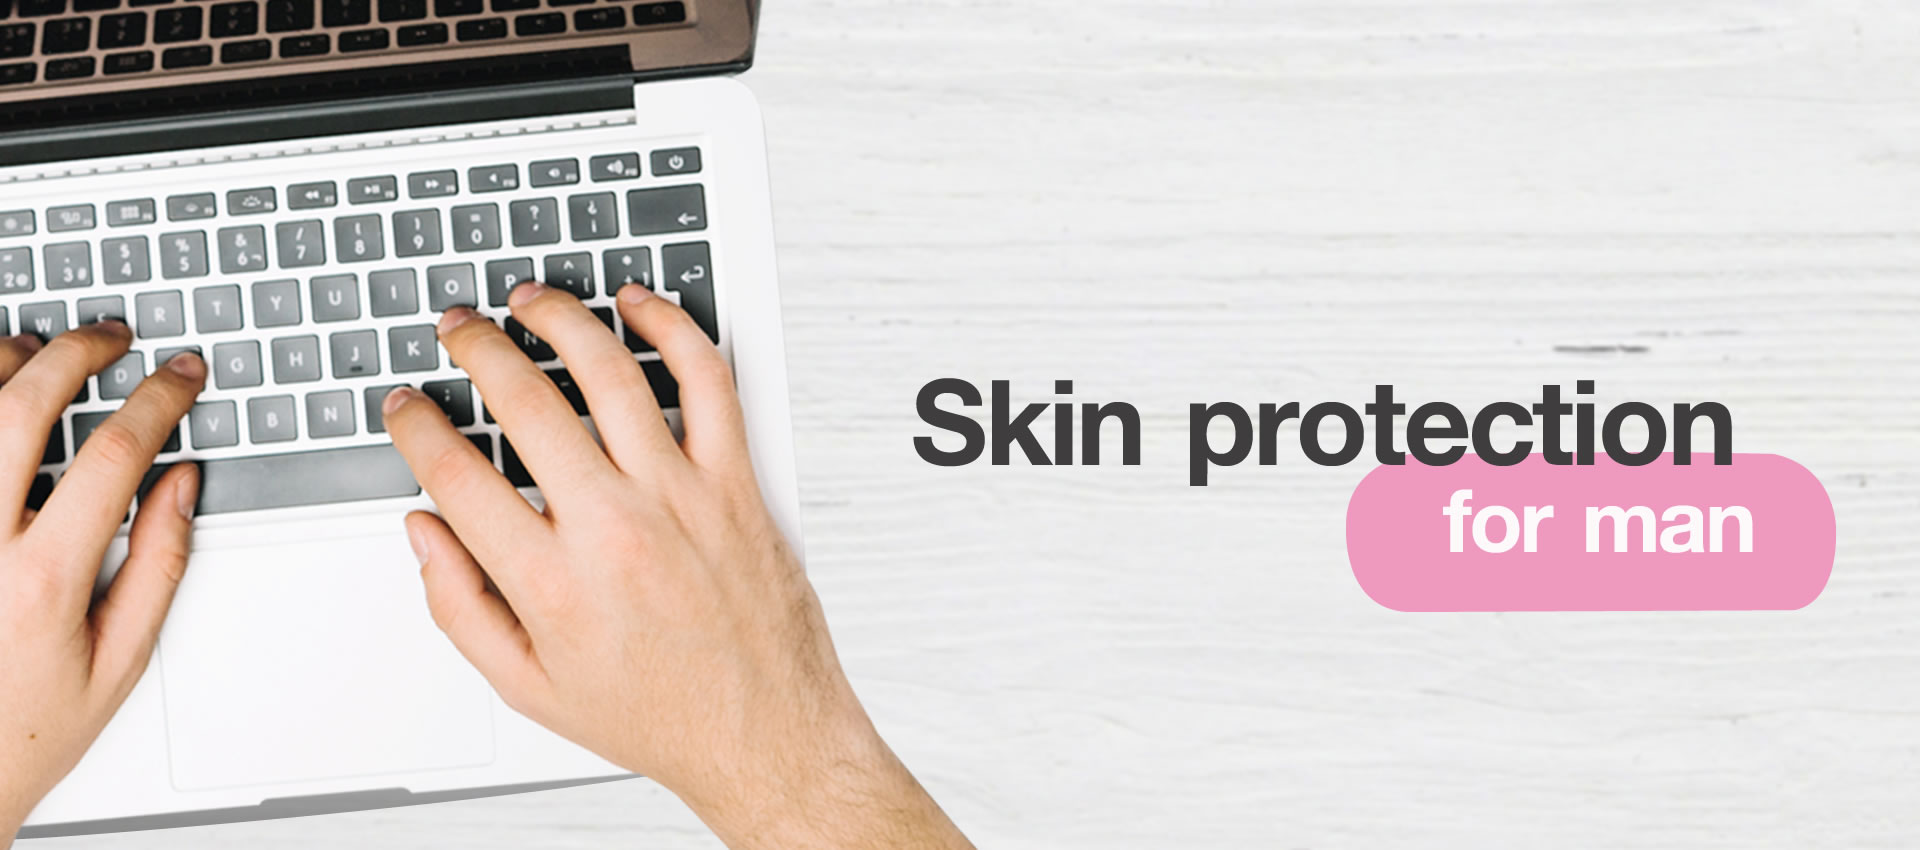 Skin protection for men